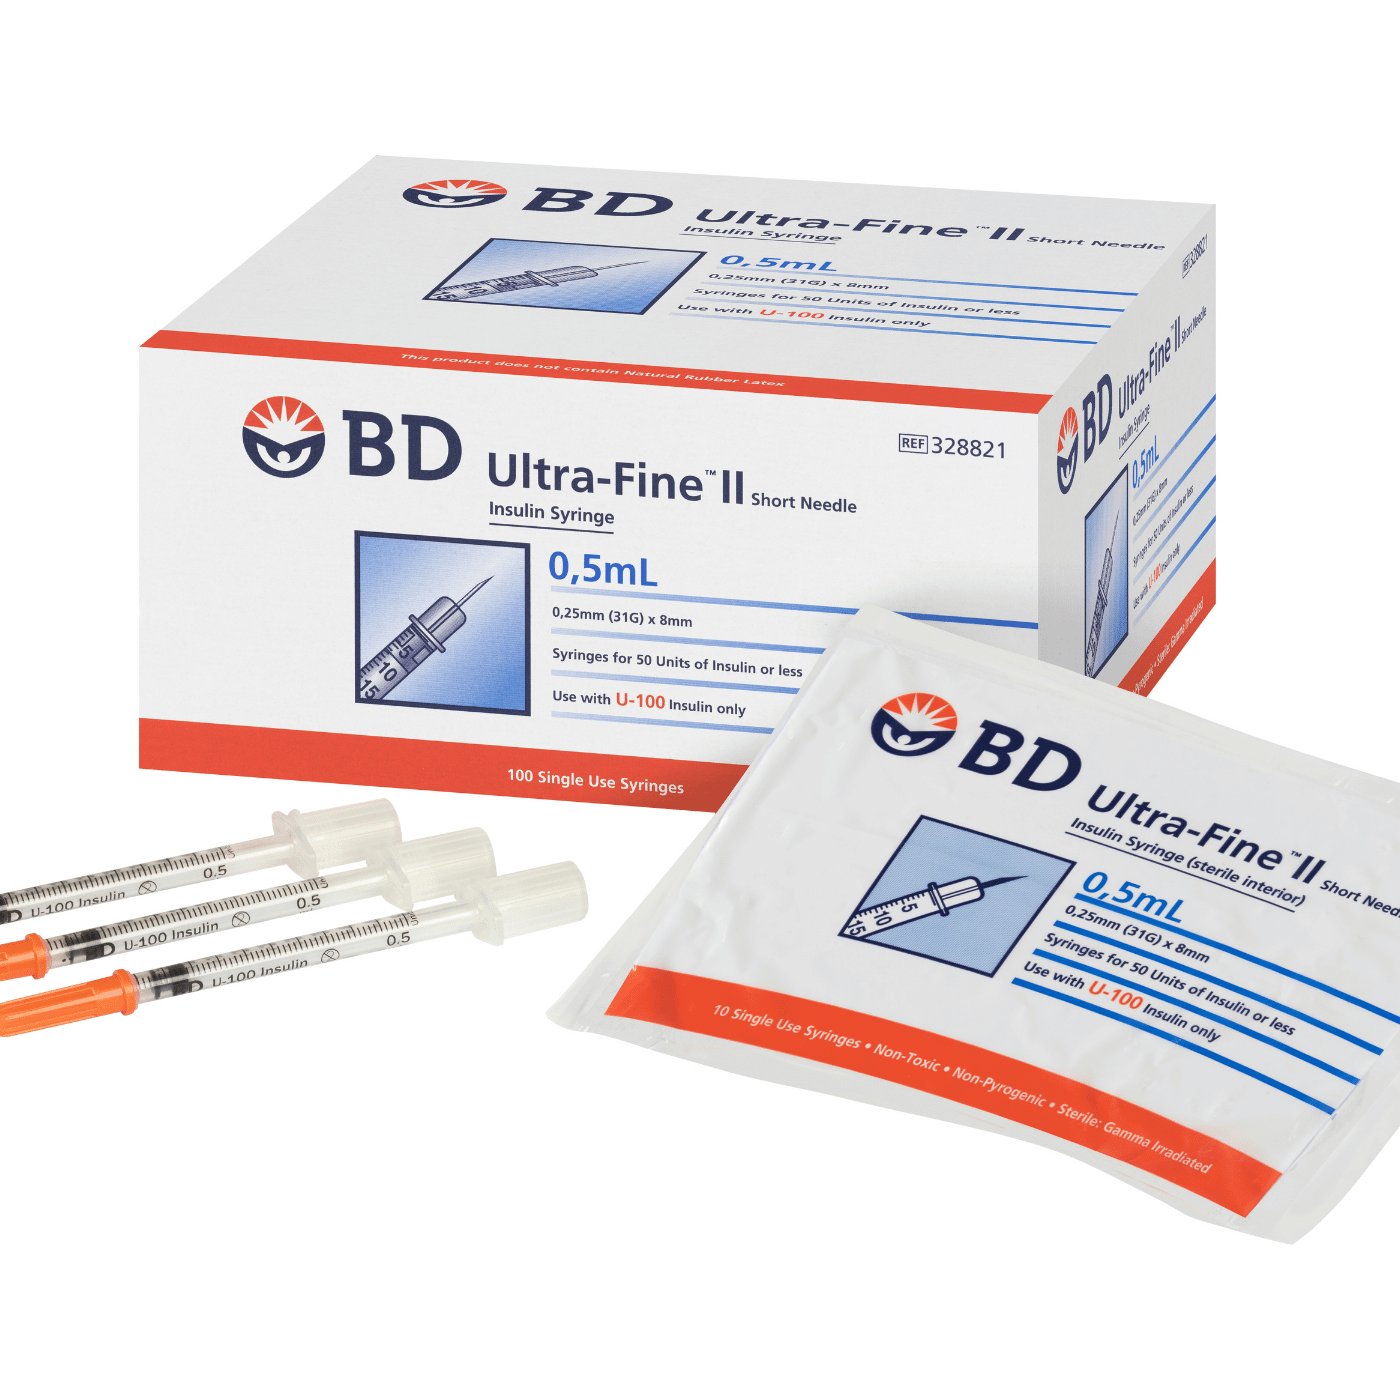 0.5mL BD Ultra-Fine II Short Needle Insulin Syringe